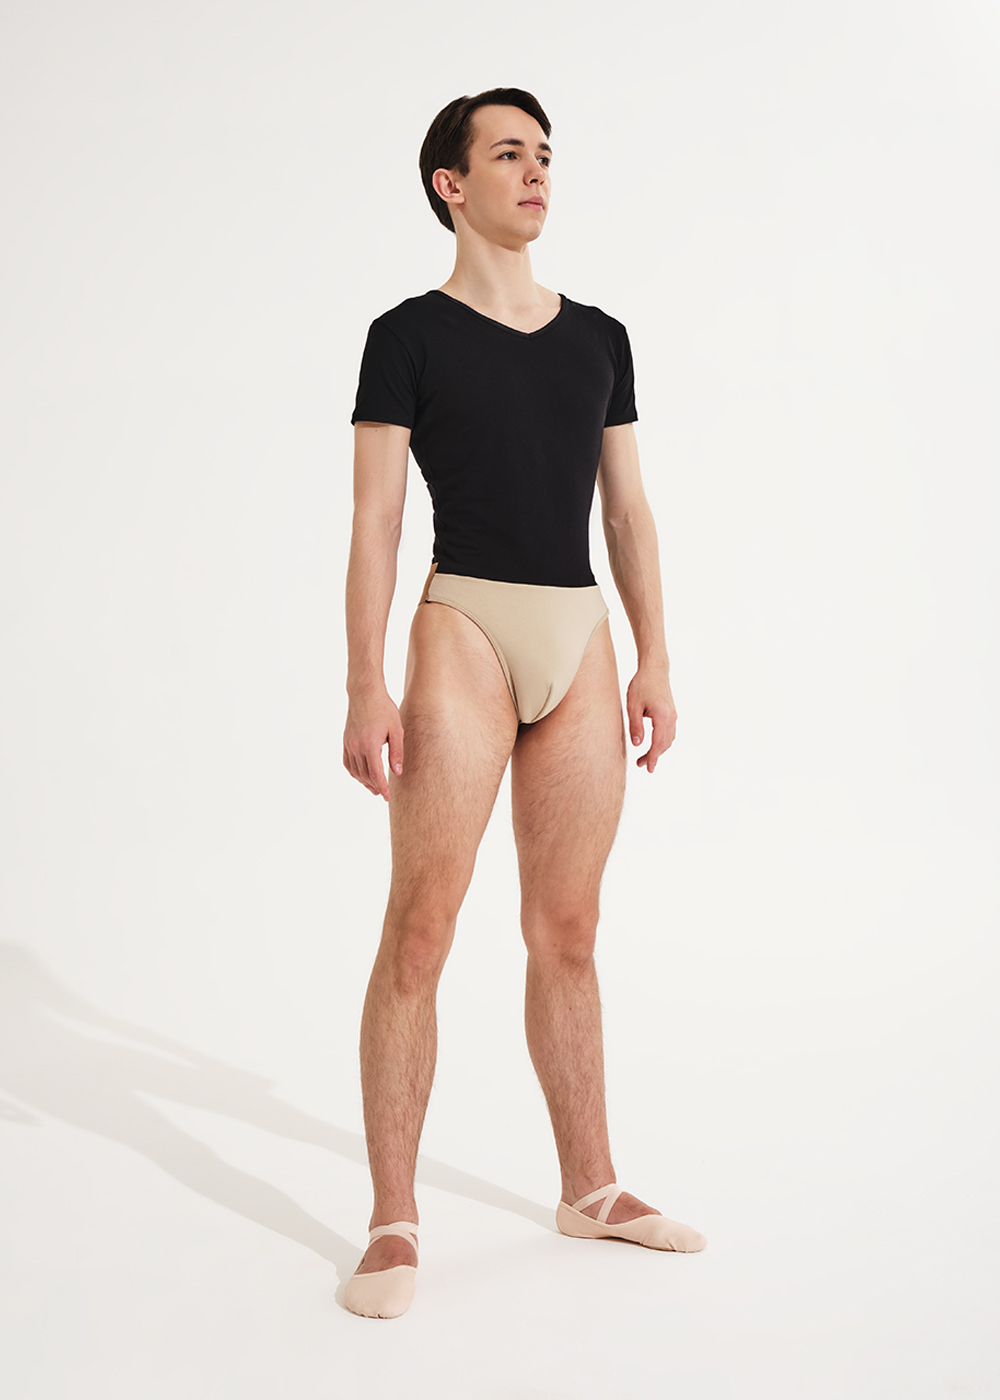 DA3088C PATTON, Men's bodysuit, cotton (DA3088C)  Grishko® Buy online the  best ballet products. Order now!